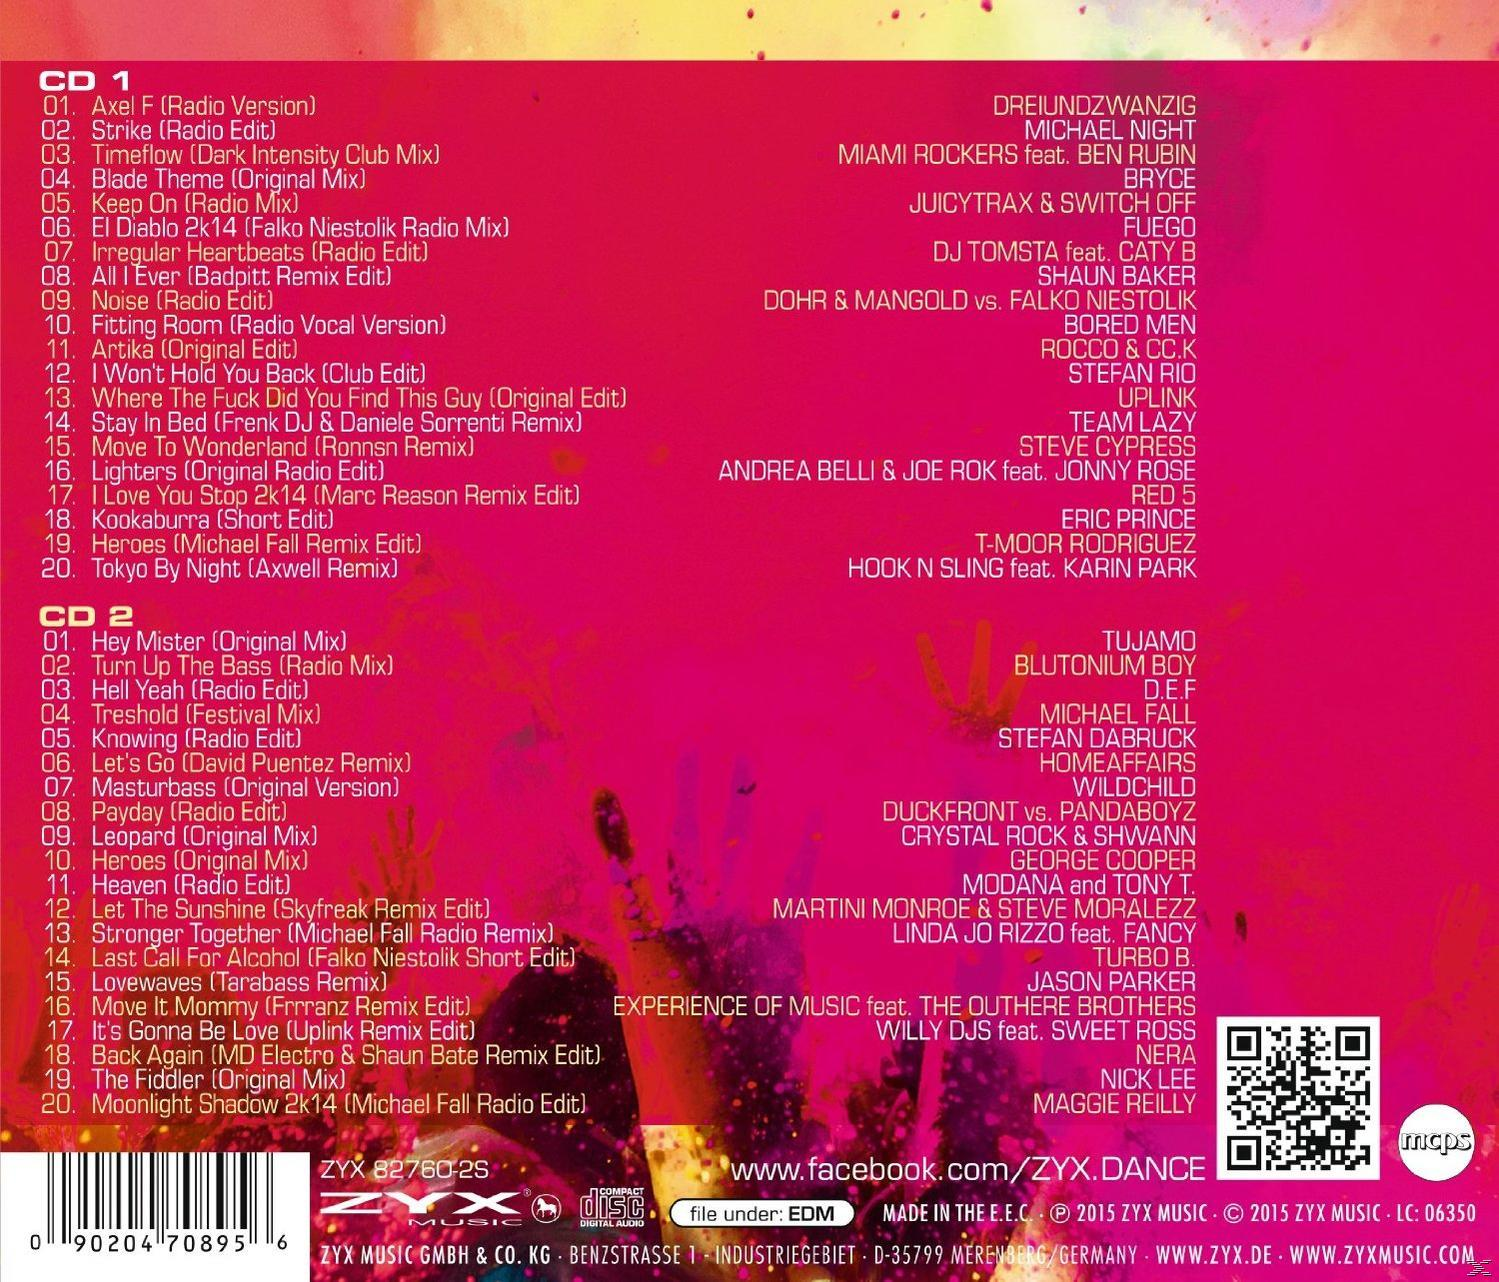 (CD) Anthems - Edm VARIOUS -